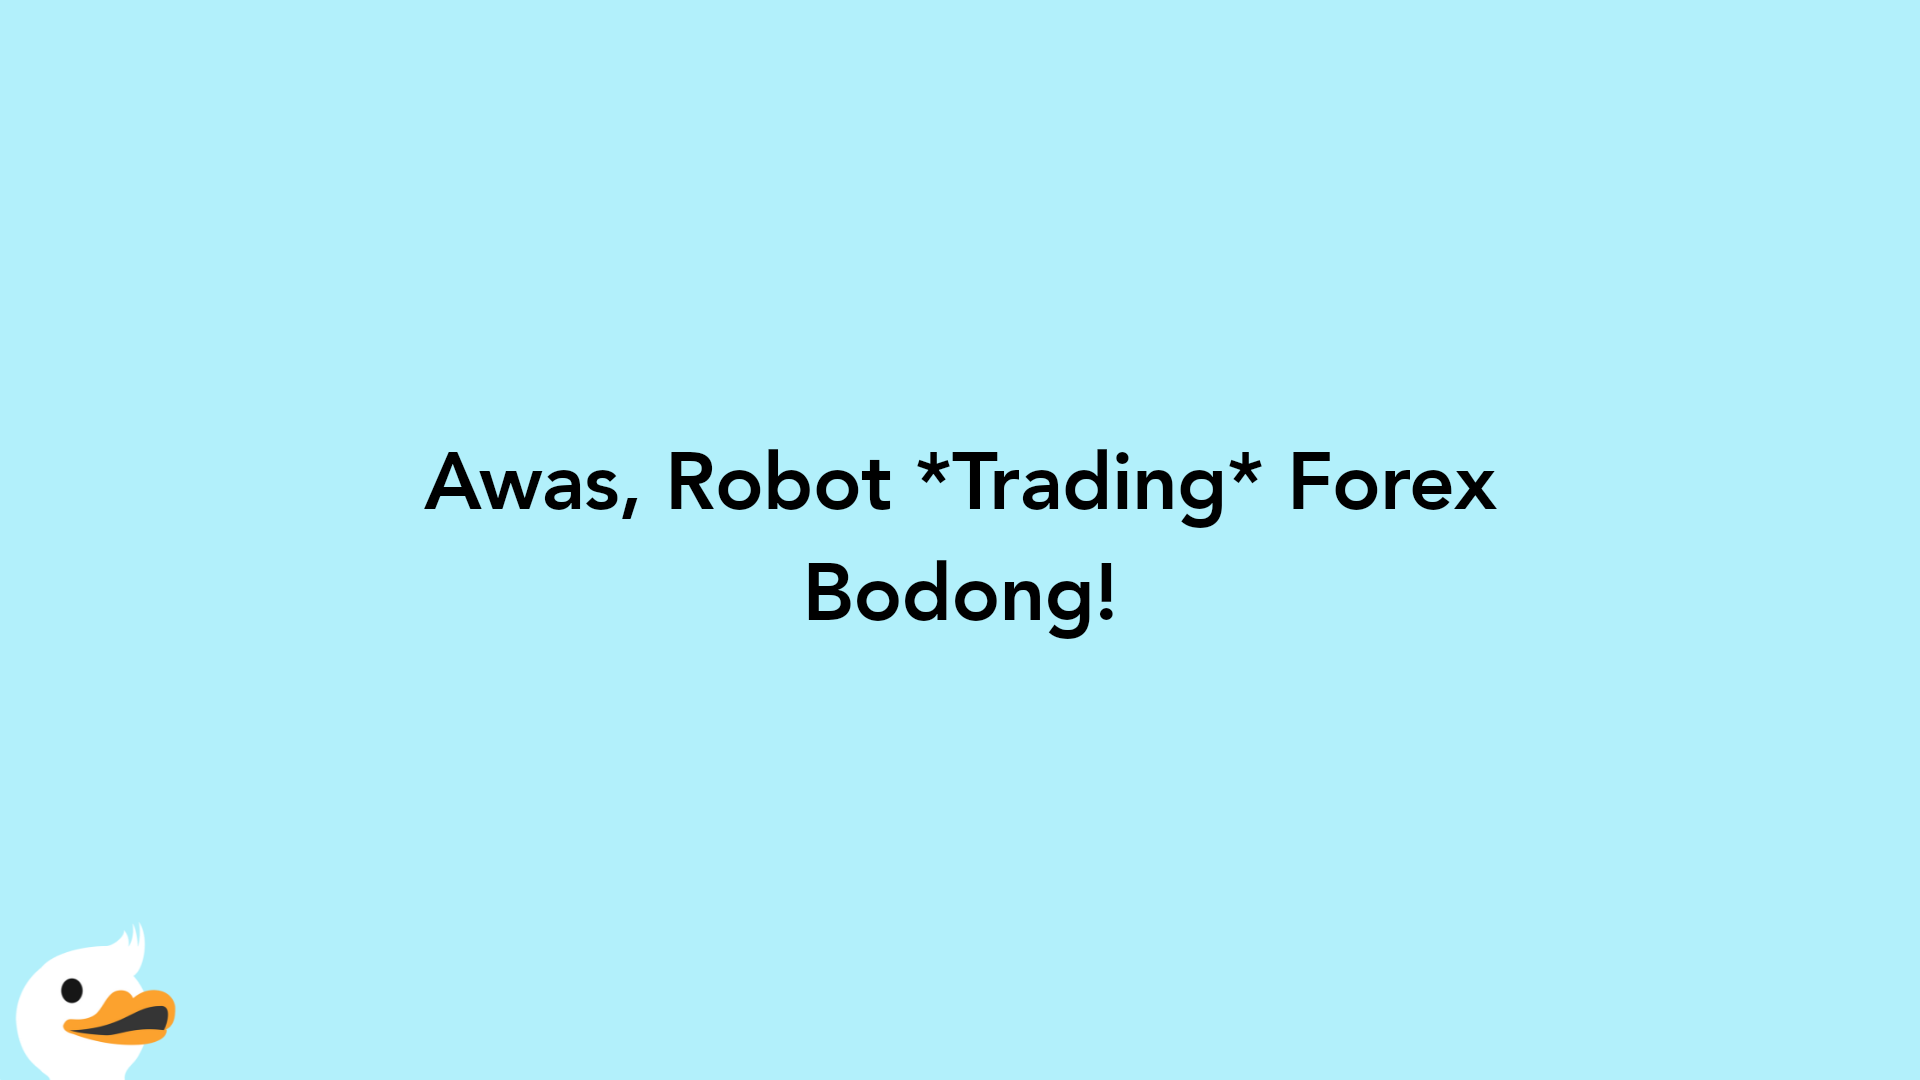 Awas, Robot Trading Forex Bodong!